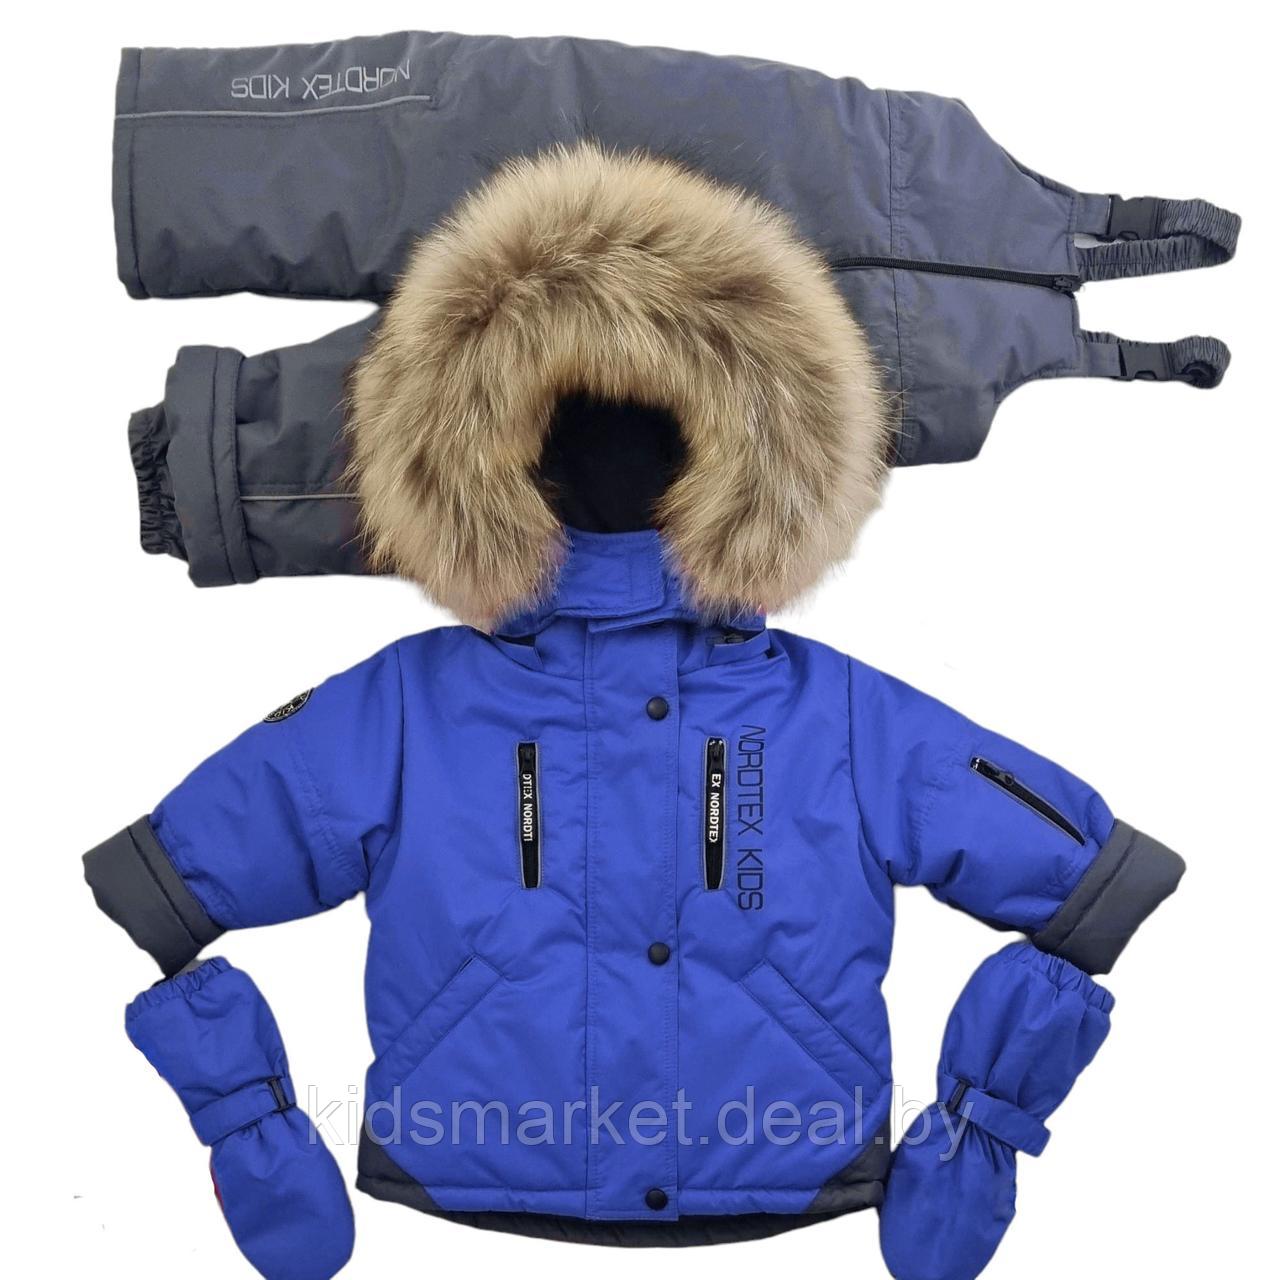 Детский зимний костюм (куртка + комбинезон) Nordtex Kids мембрана синий (Размеры: 86, 92)